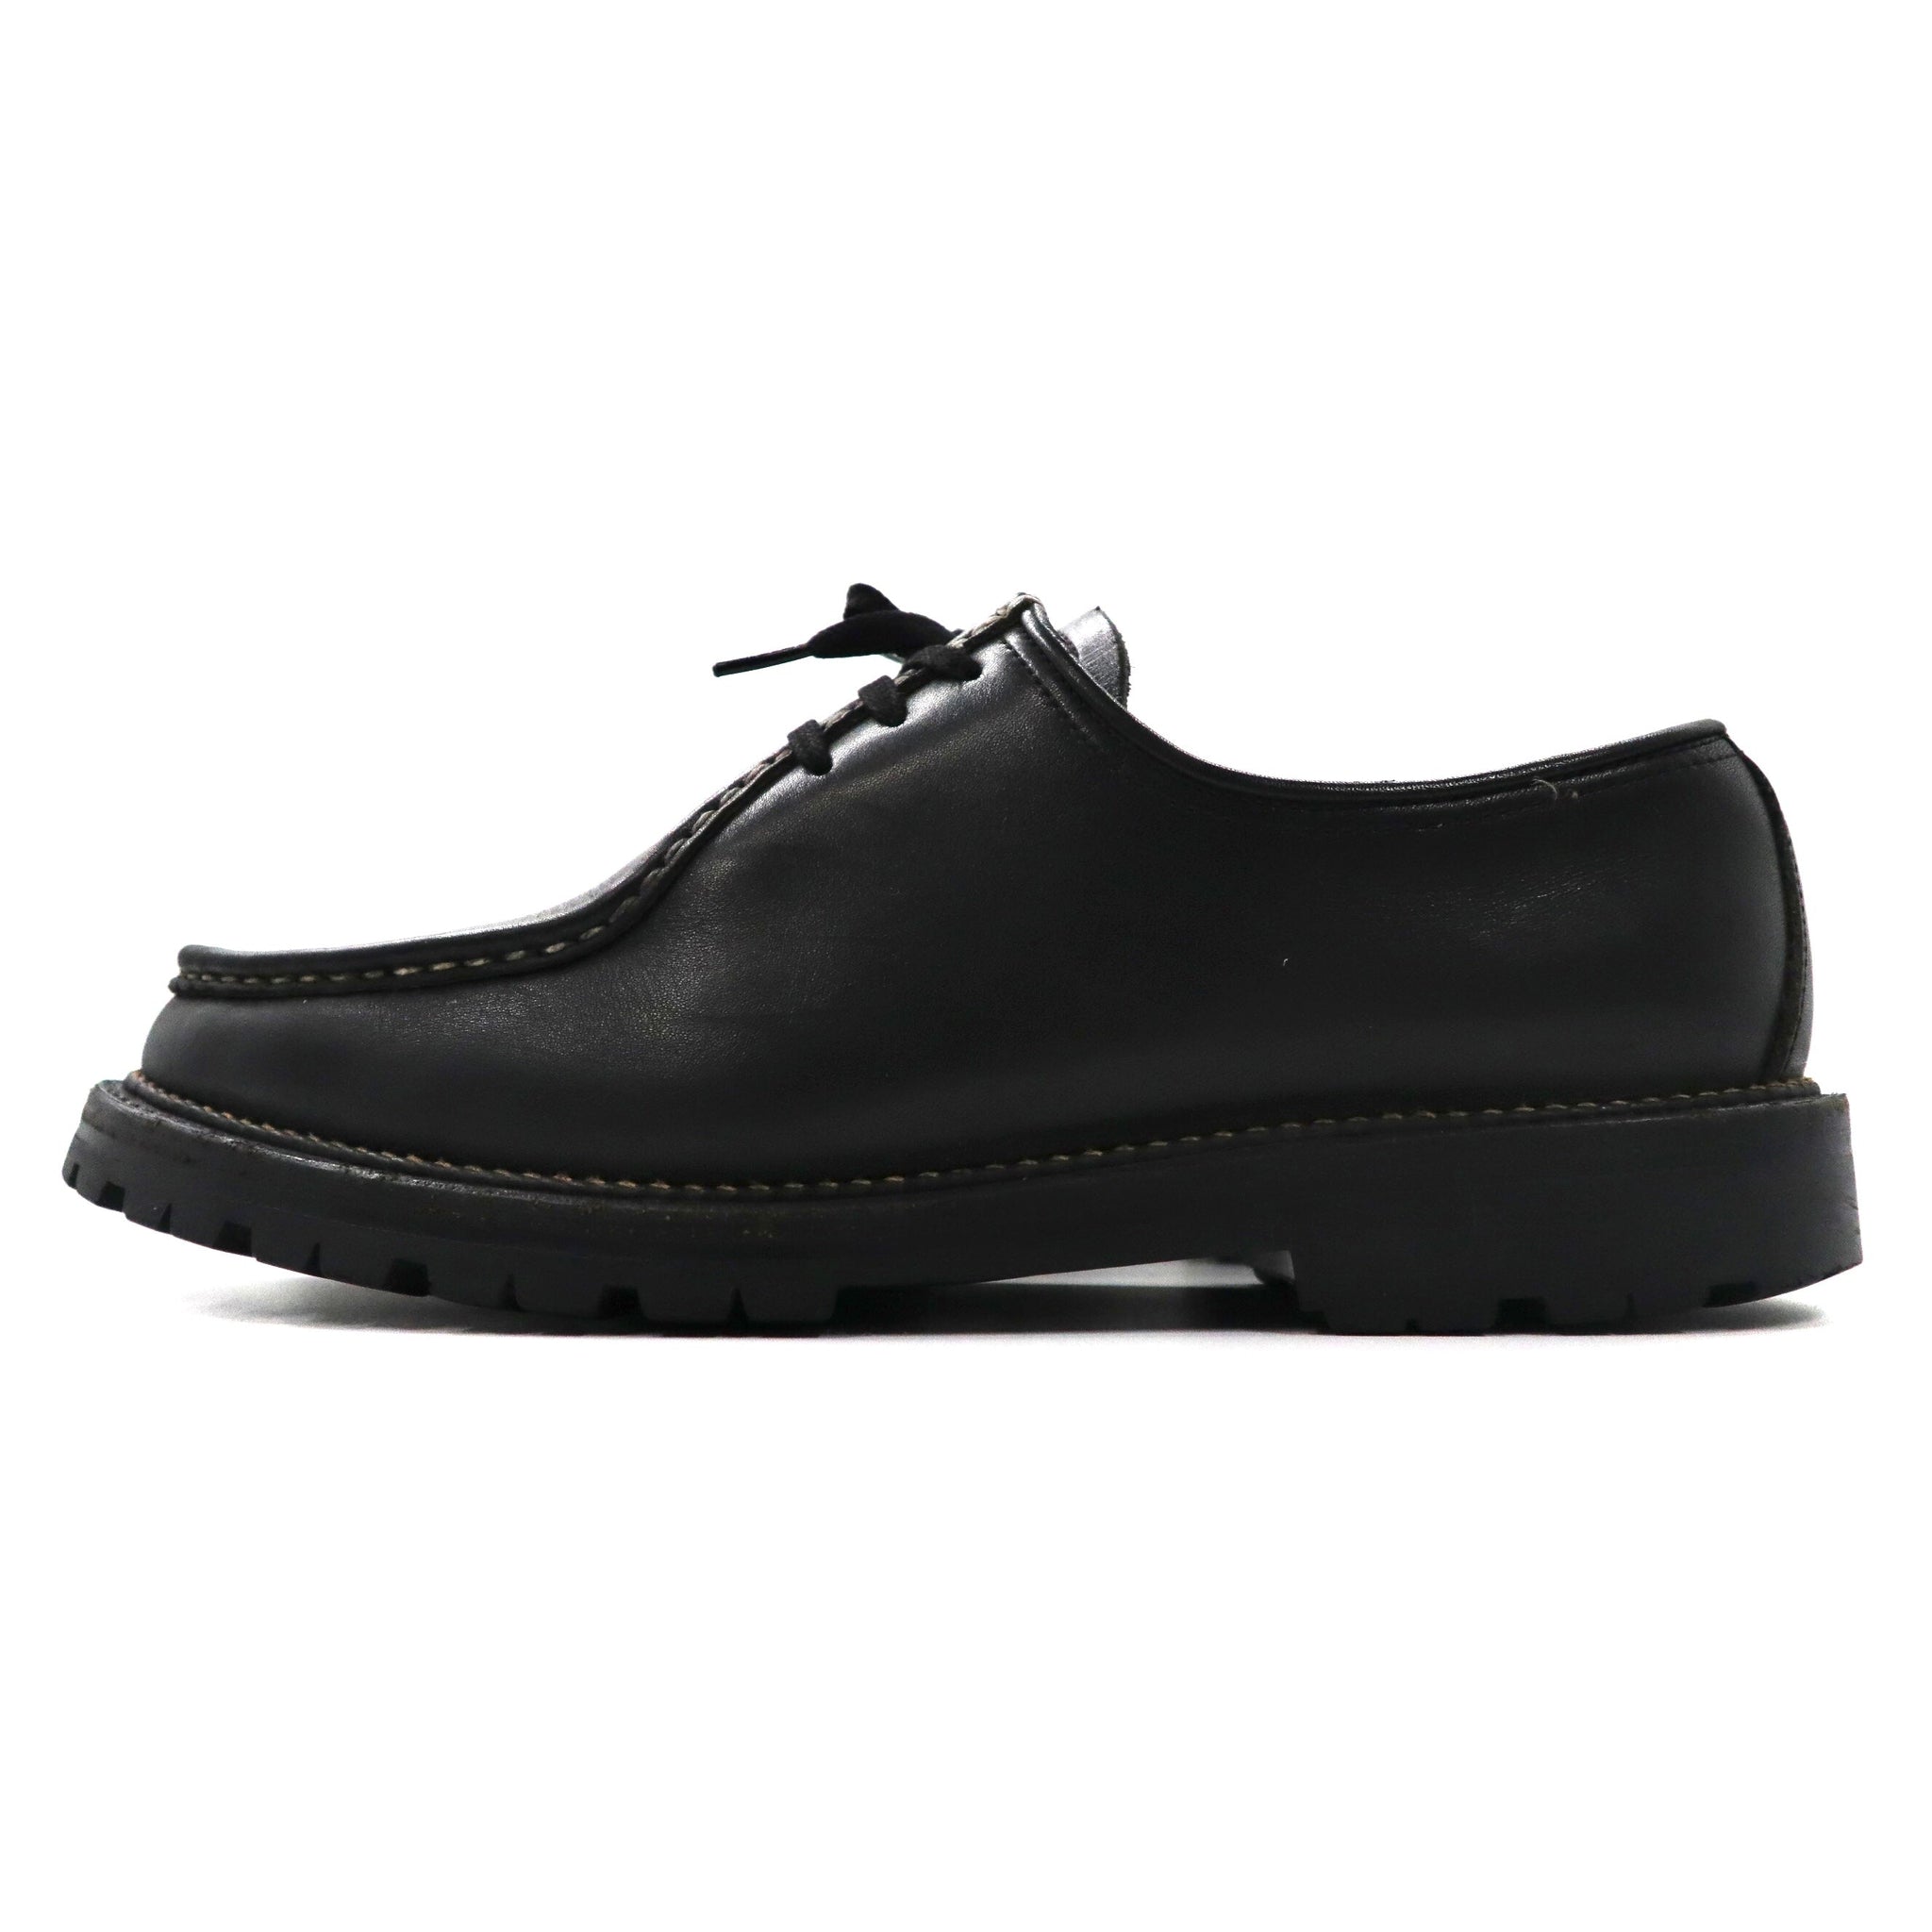 REGAL EAST COAST COLLECTION Tyrolean Shoes US8.5 Black 